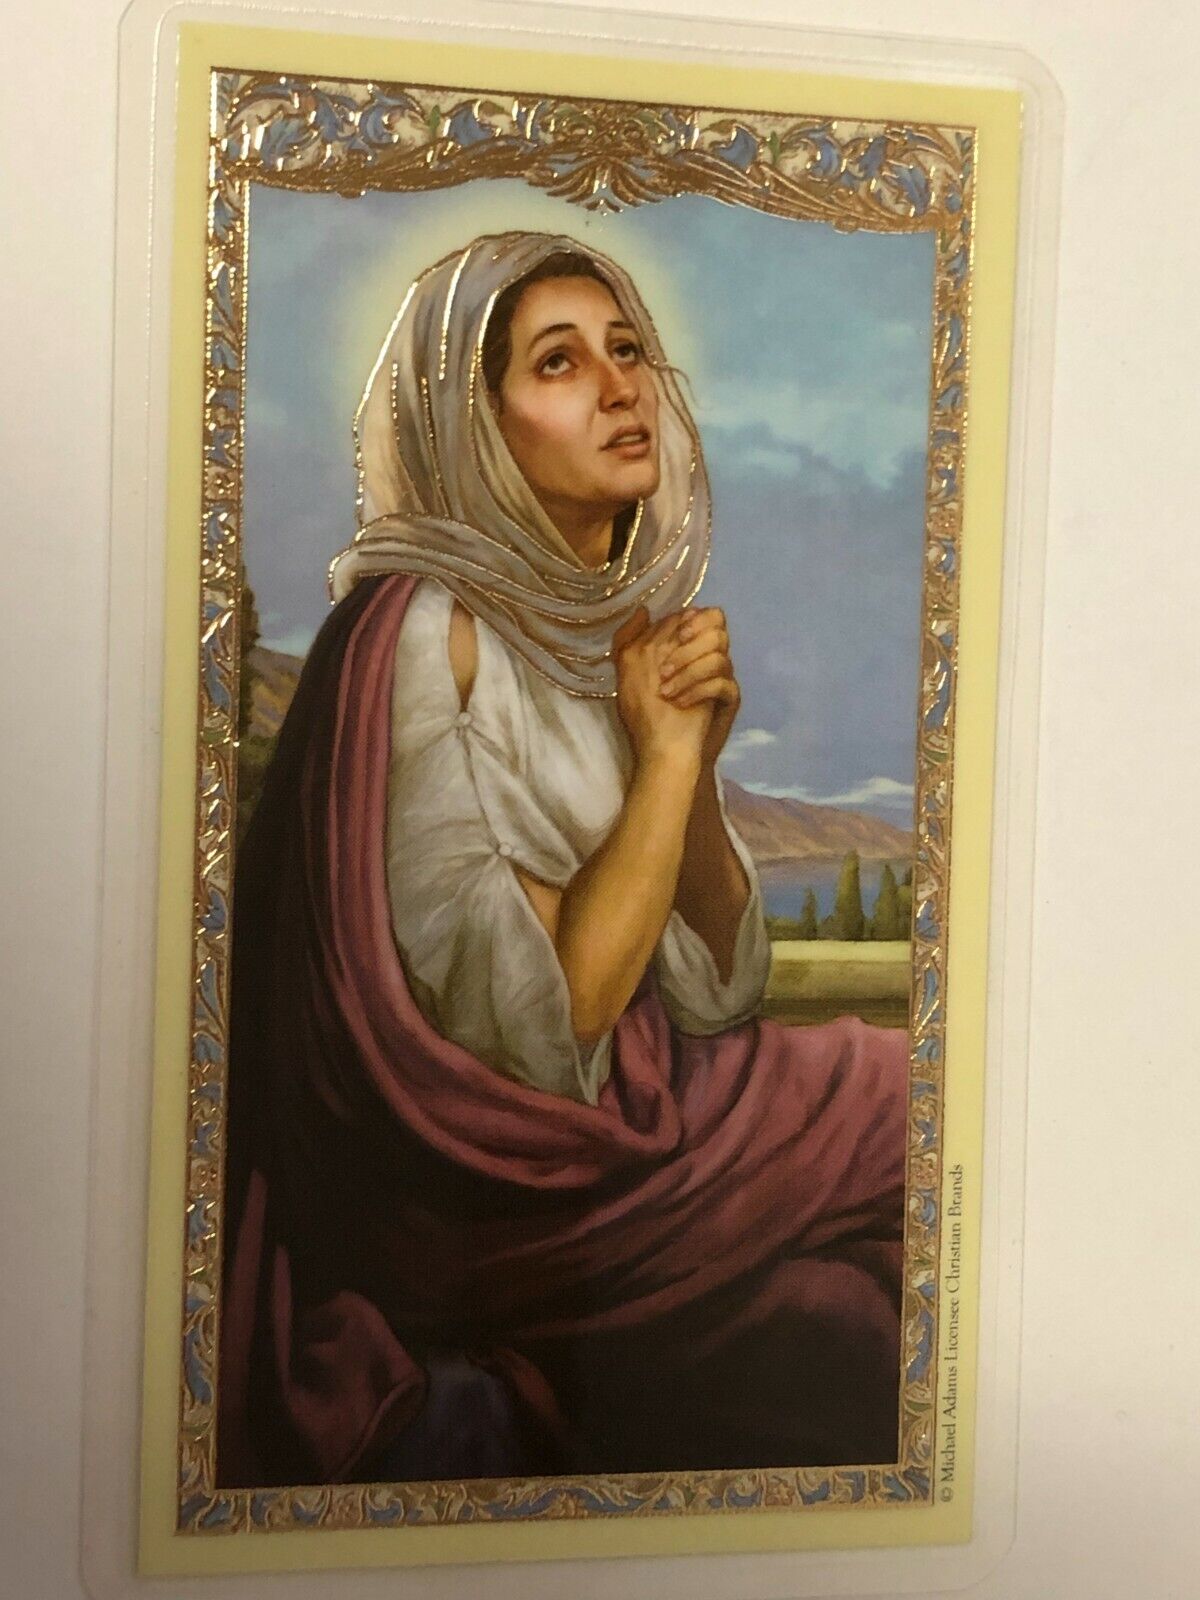 Saint Monica Laminated Prayer Card, new - Bob and Penny Lord